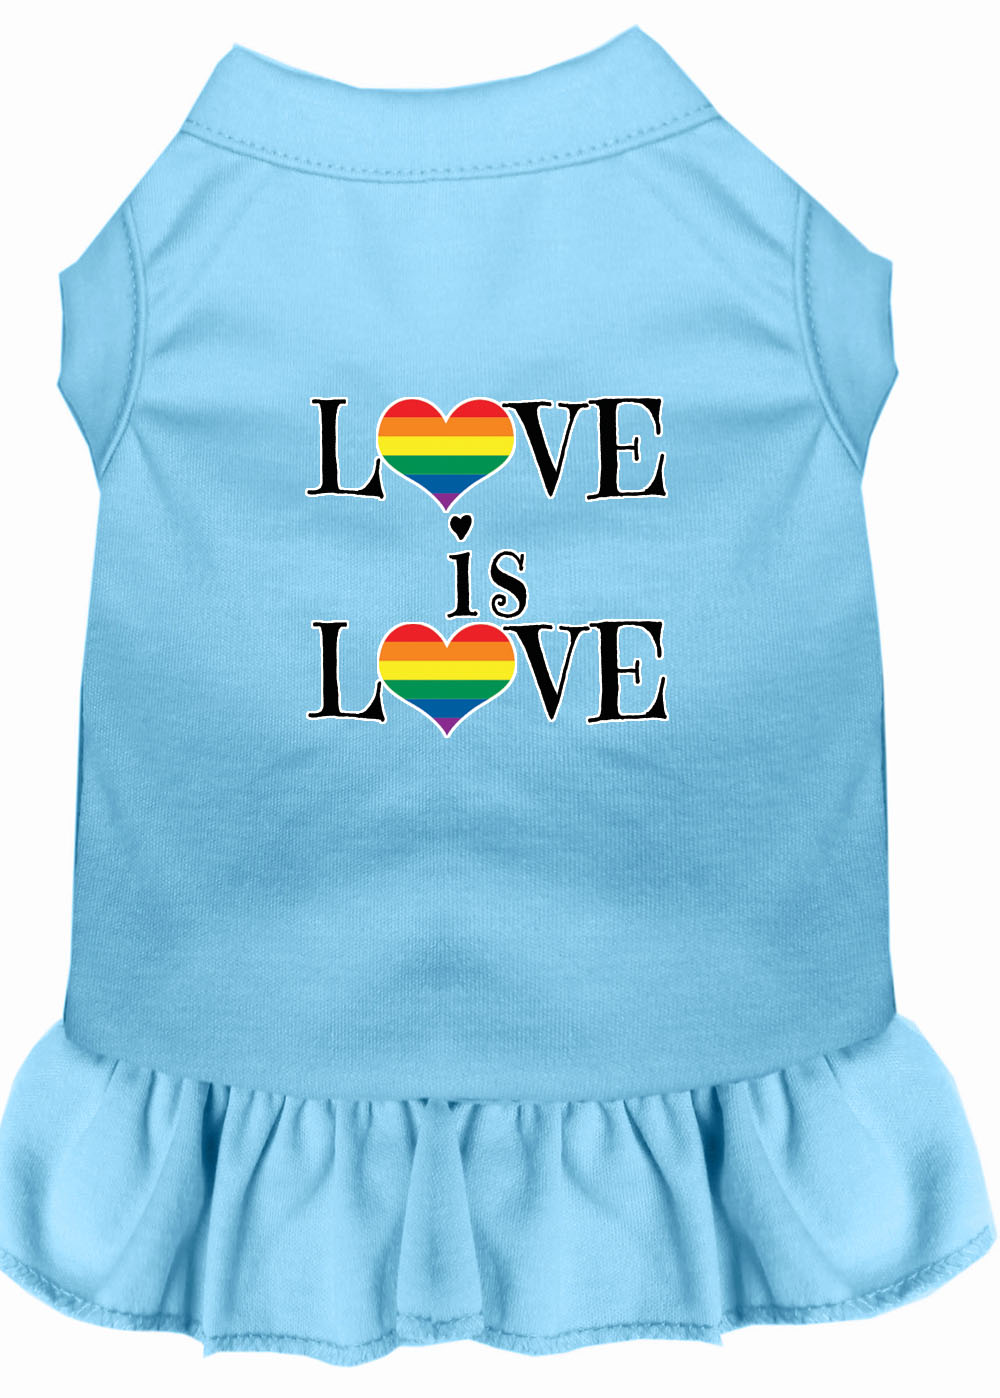 Love is Love Screen Print Dog Dress Baby Blue XL